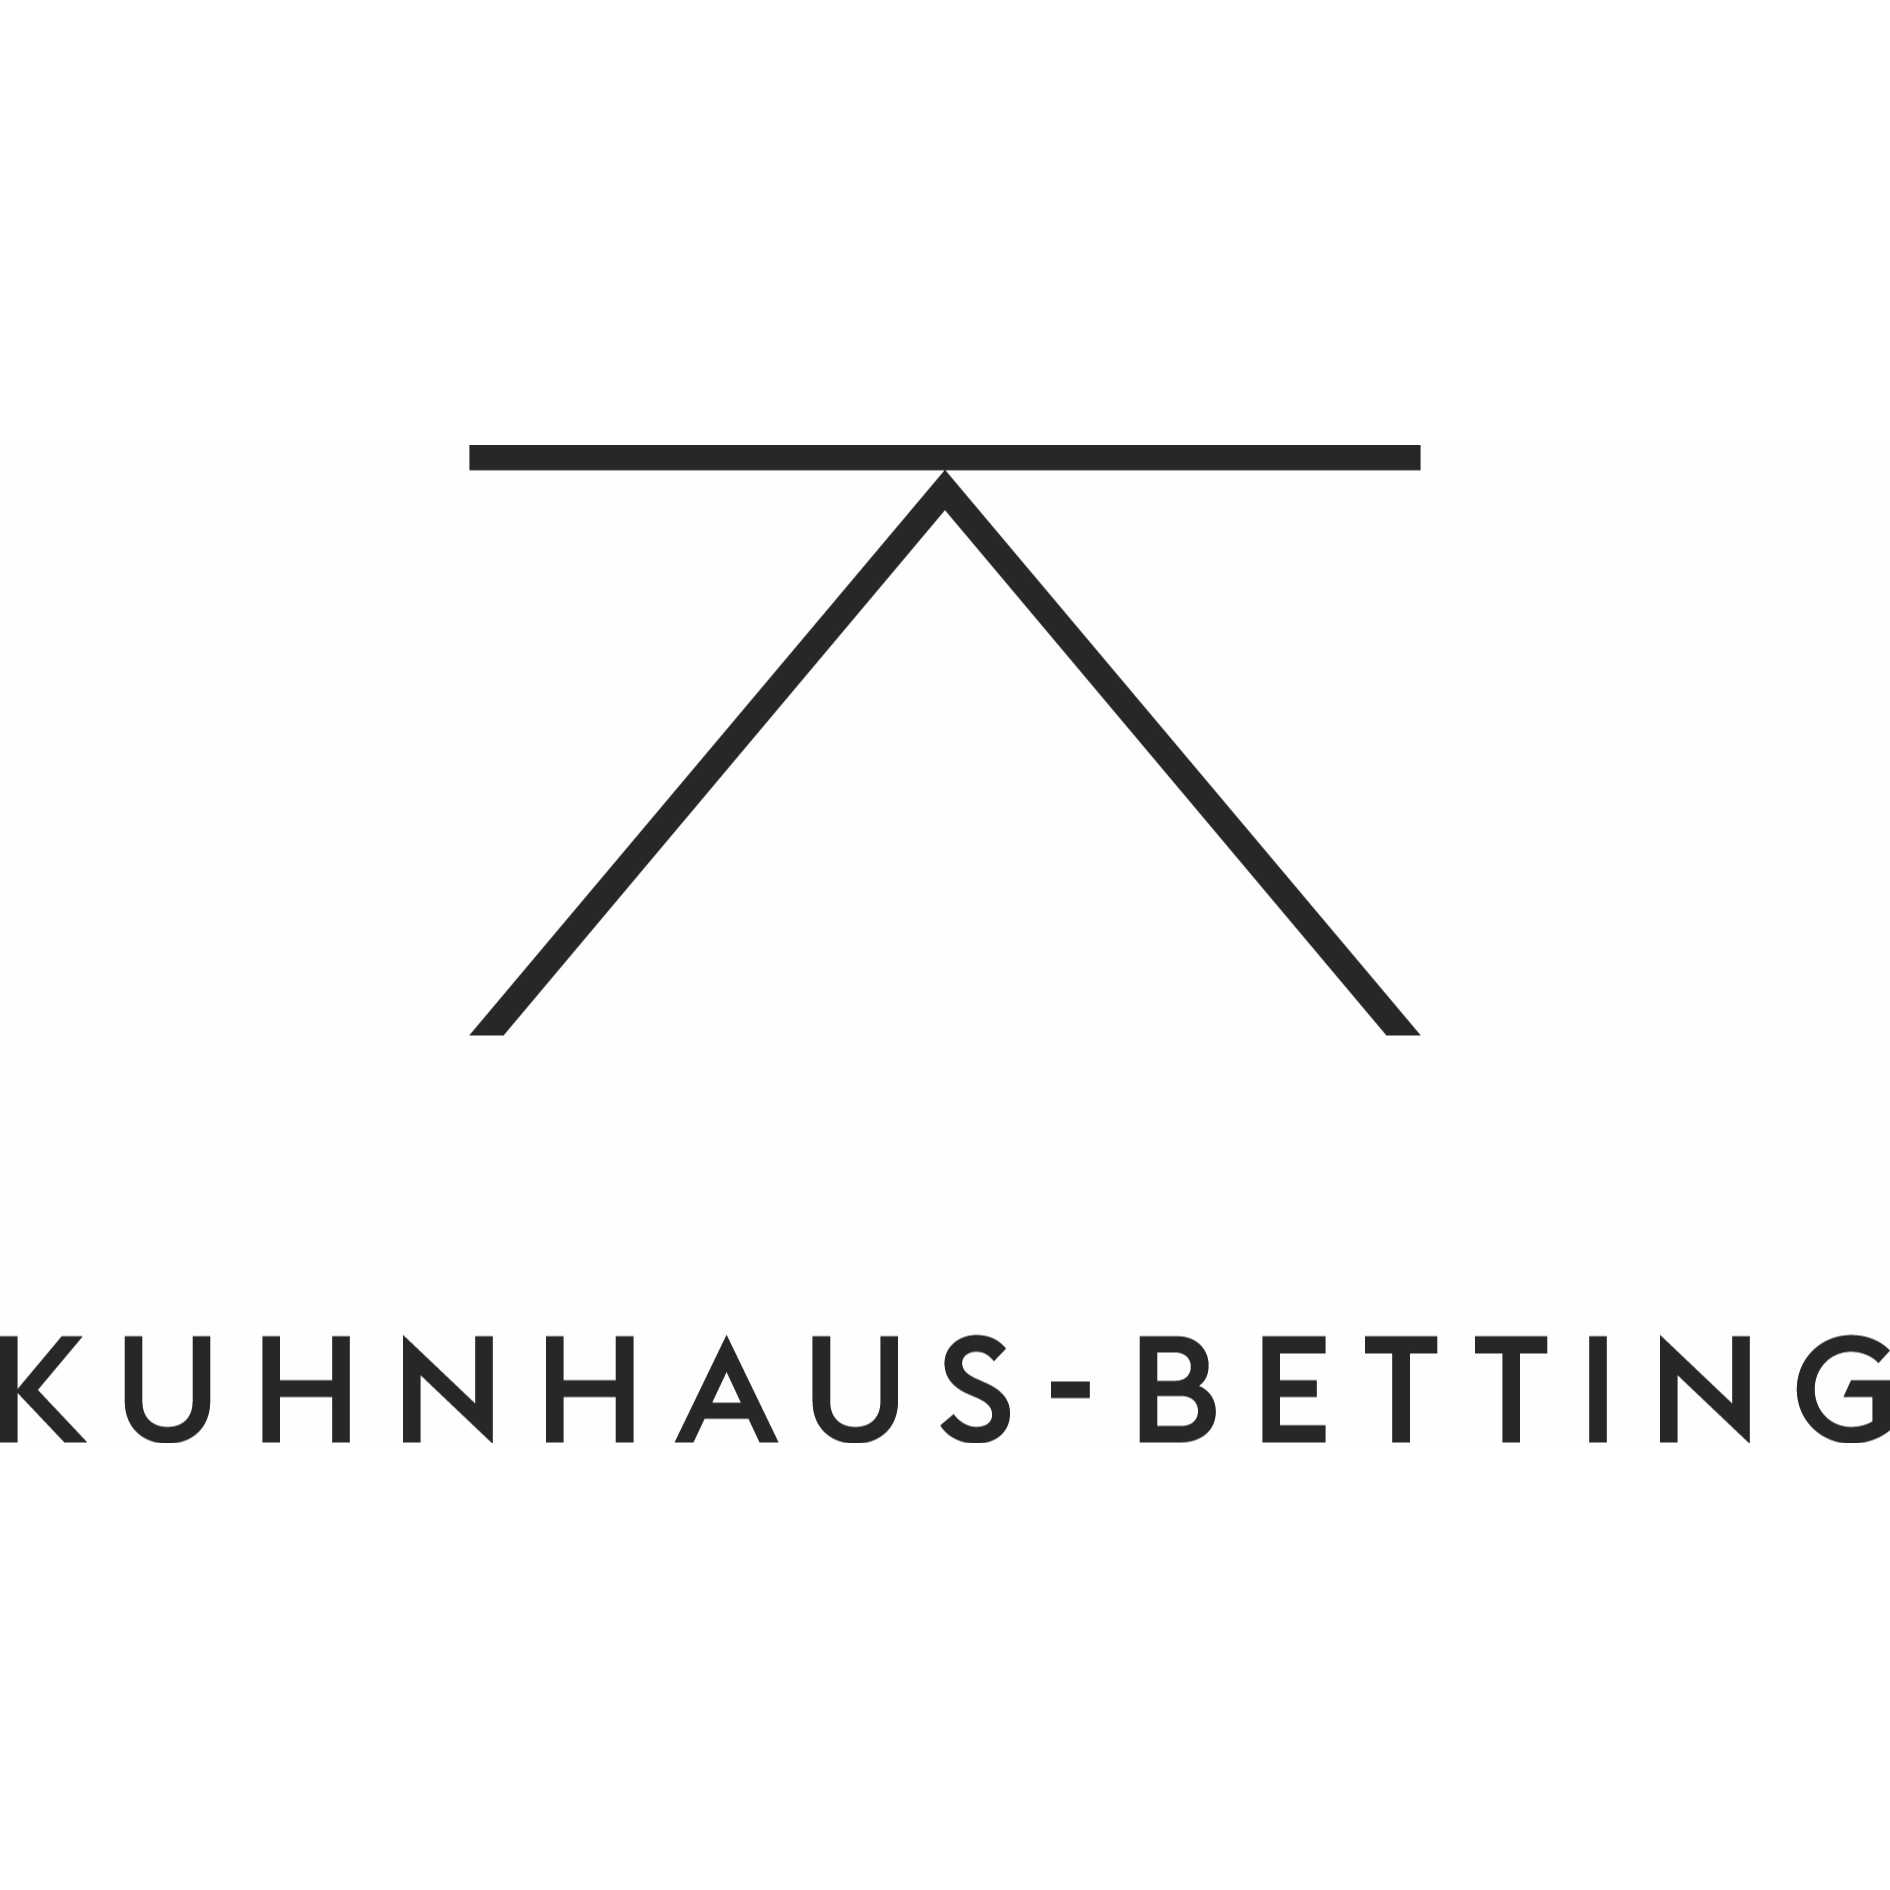 Kuhnhaus-Betting Architekten  